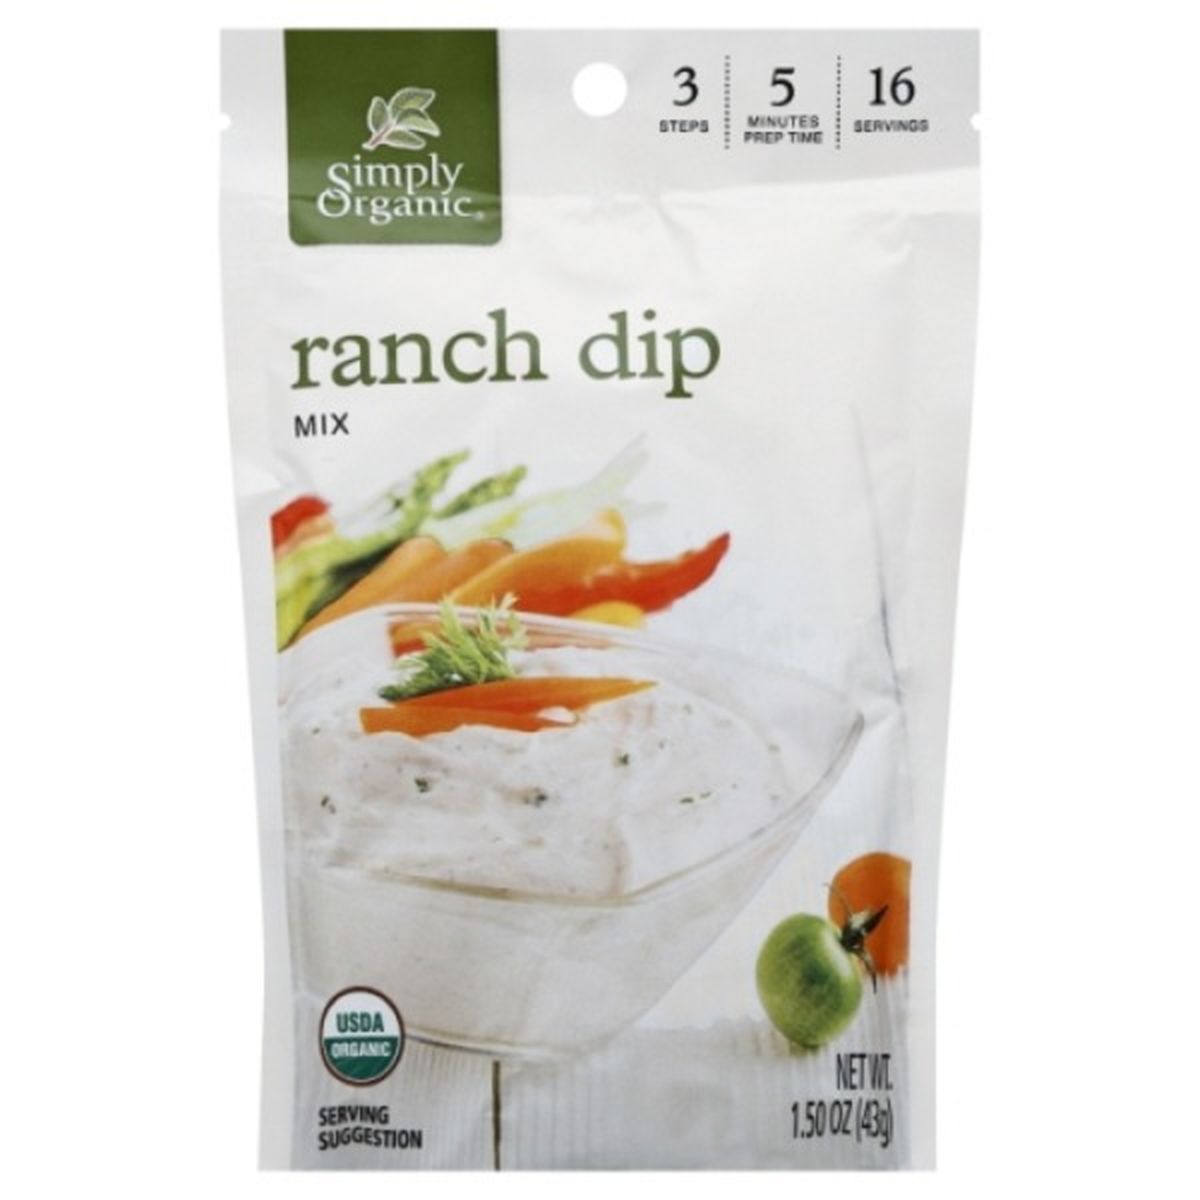 Calories in Simply Organic Dip Mix, Ranch